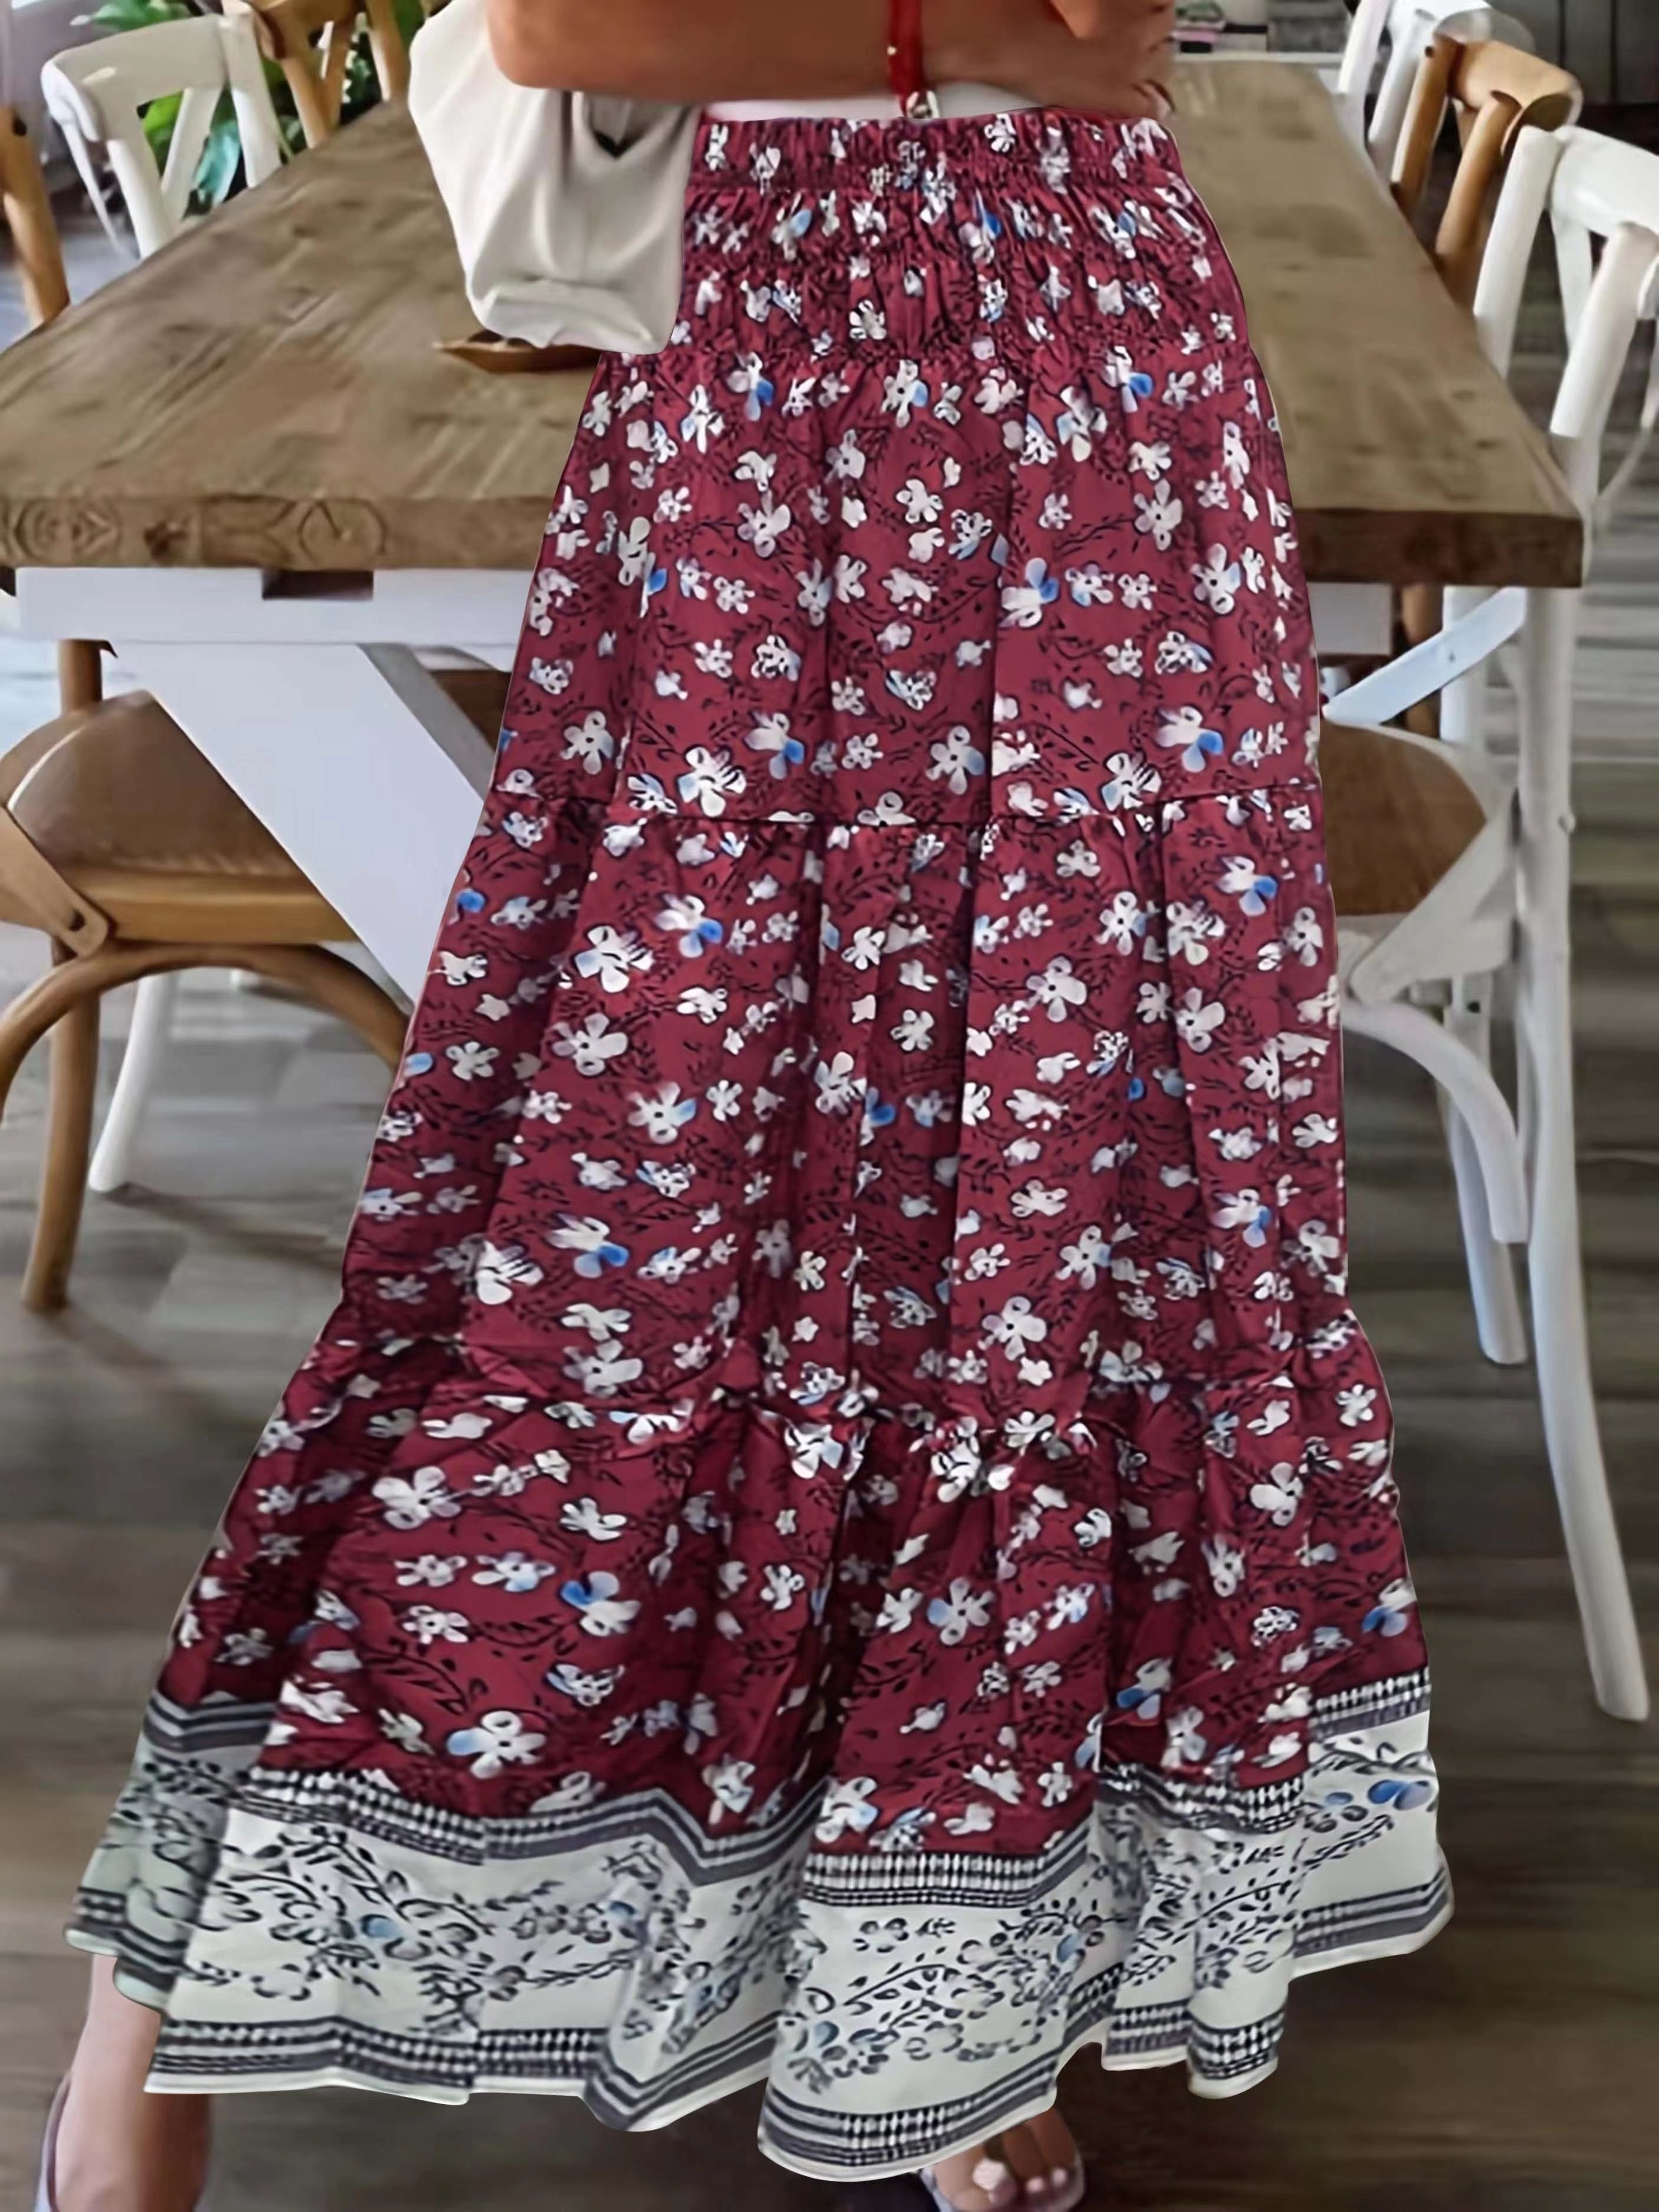 Women Lady Chiffon Long Skirt A Line Elastic High Waist Swing Boho Beach  Fashion